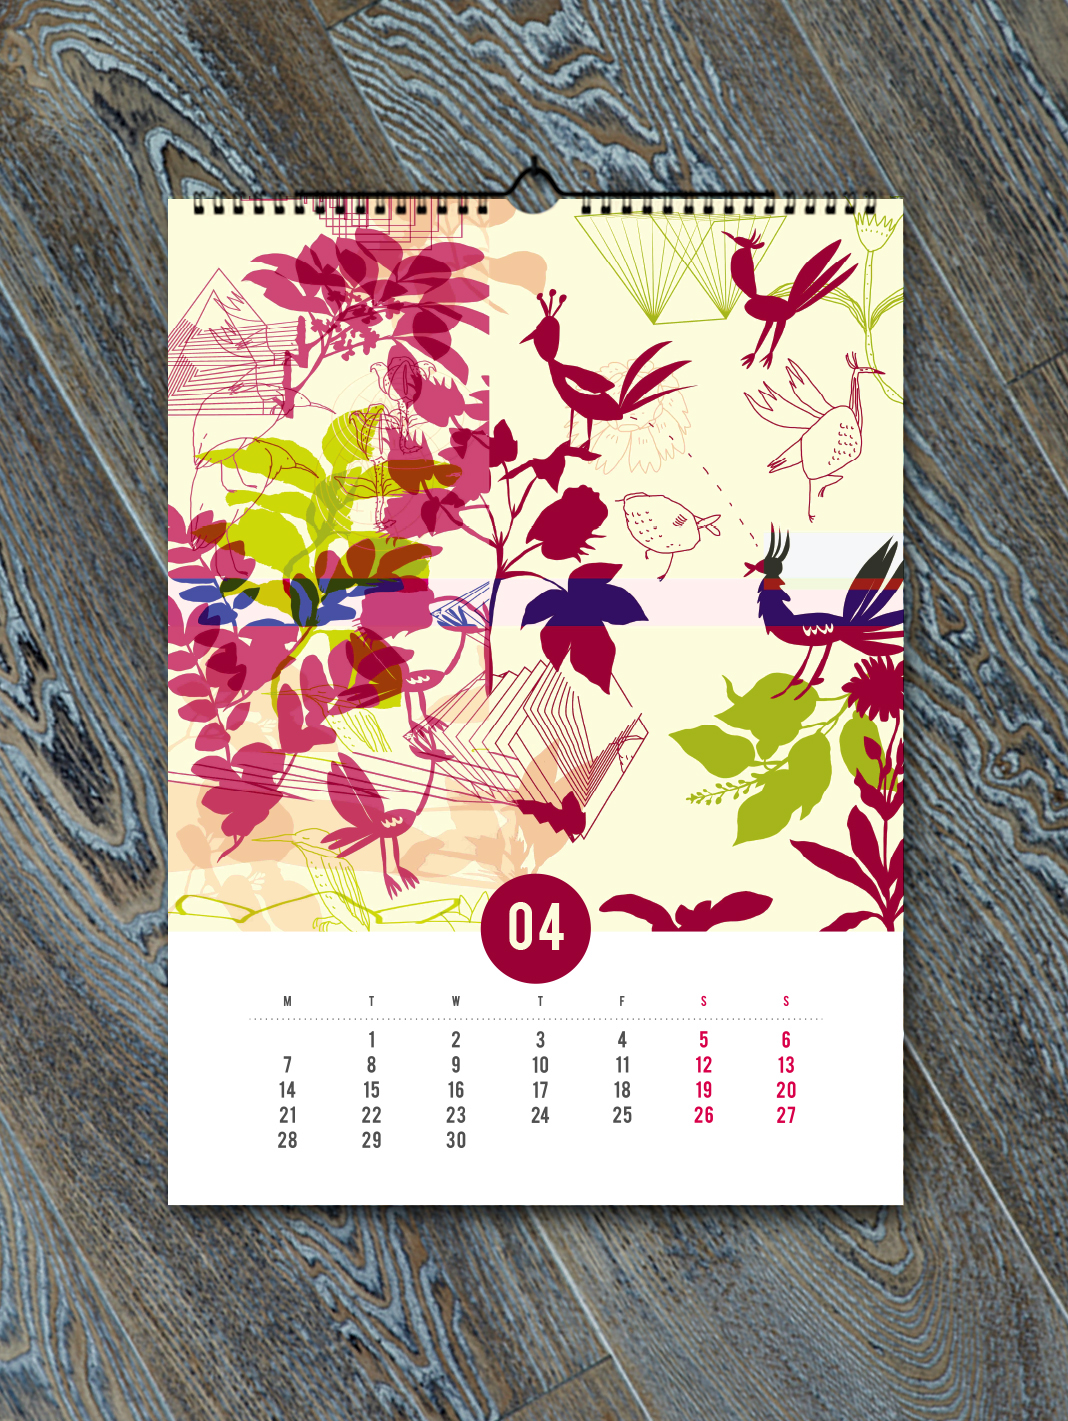 calendar Calendar 2014 owl forest wood ornament pattern winter spring summer autumn Space  cosmos Flowers rabbit